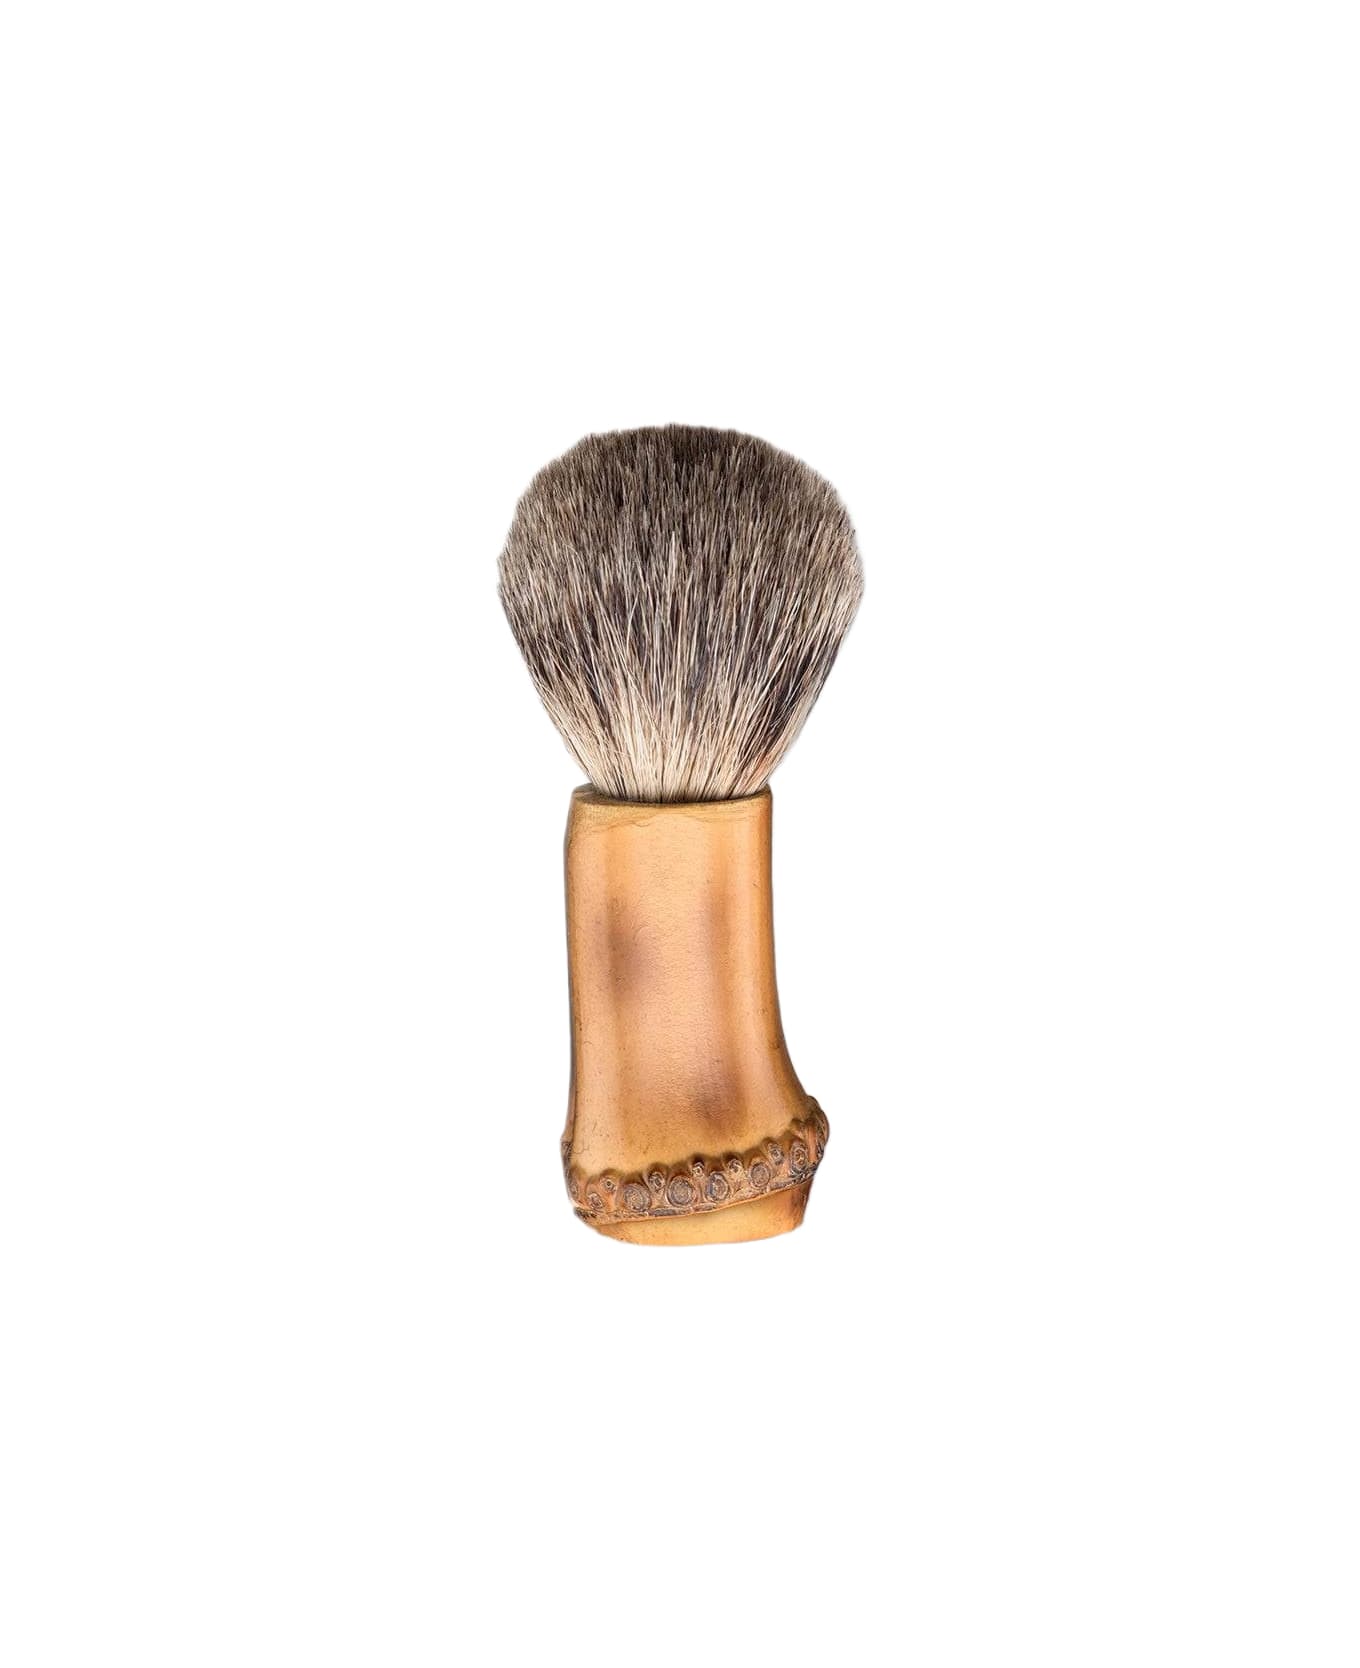 Larusmiani Shaving Brush 'g. Carducci' Beauty - Neutral